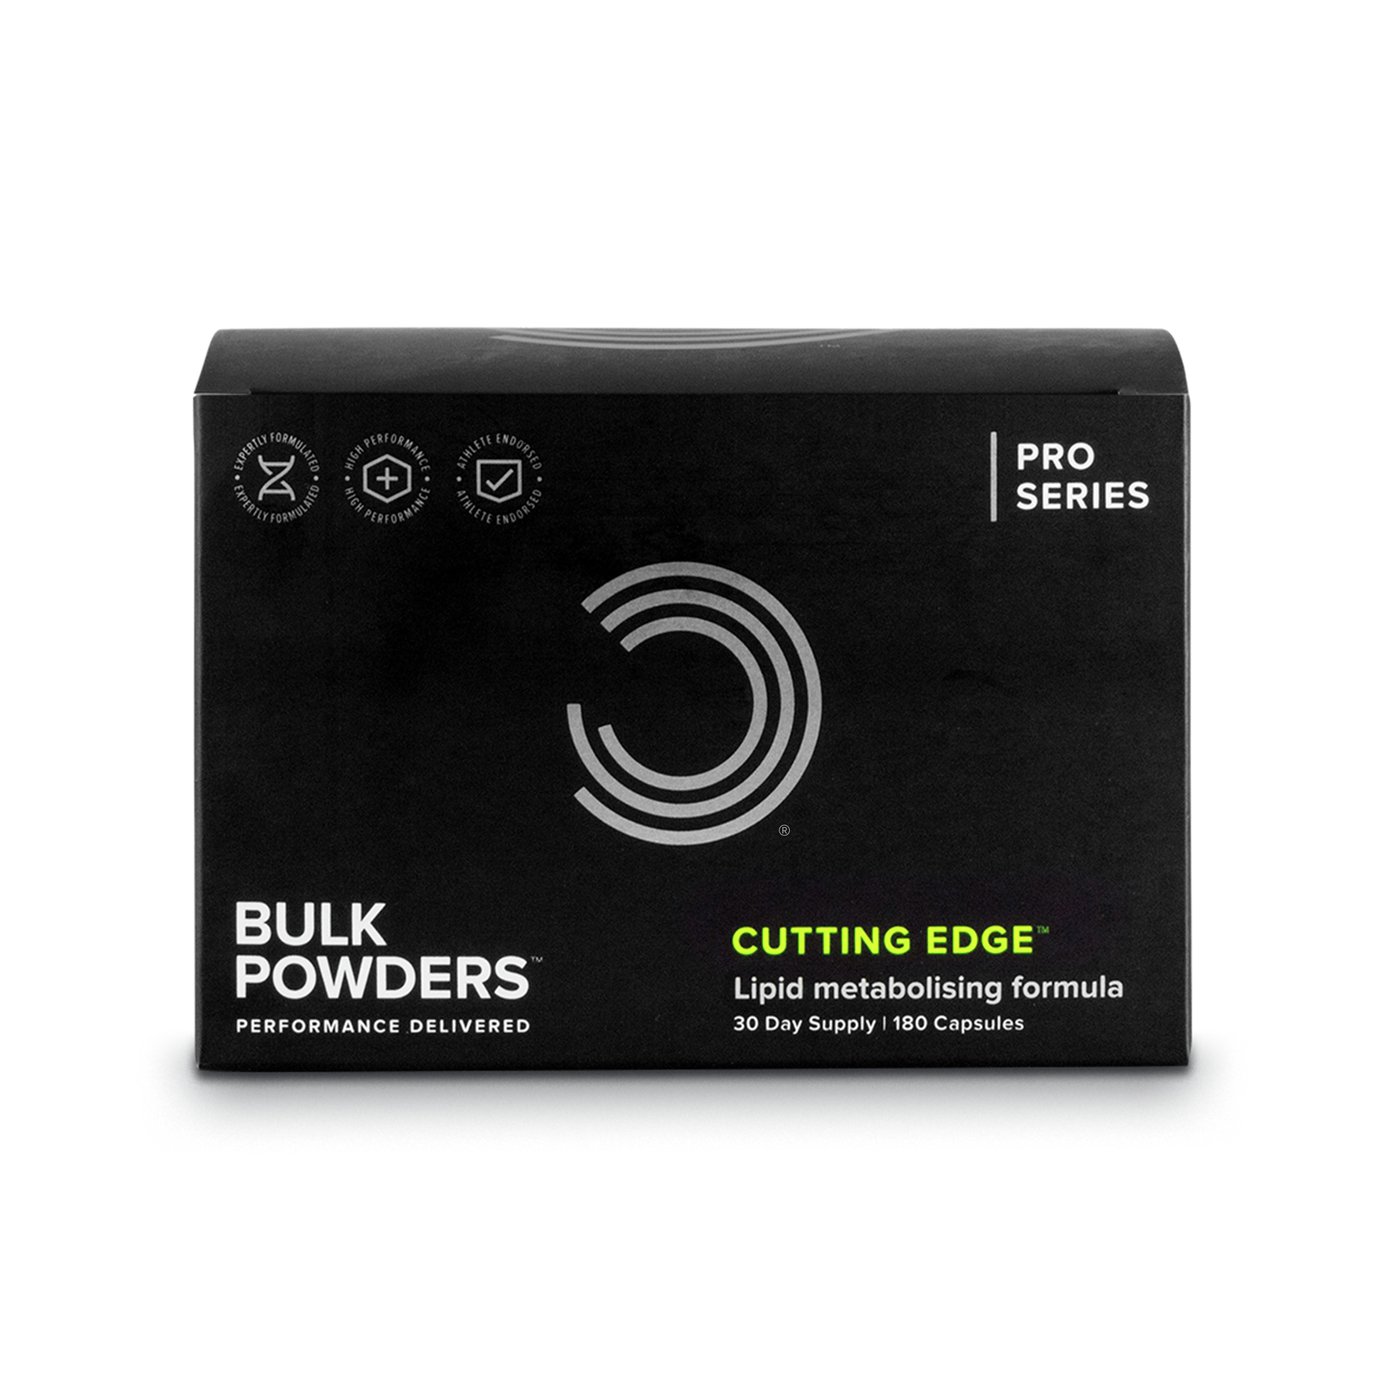 Bulk Powders Pro Series Cutting Edge Capsules x 180